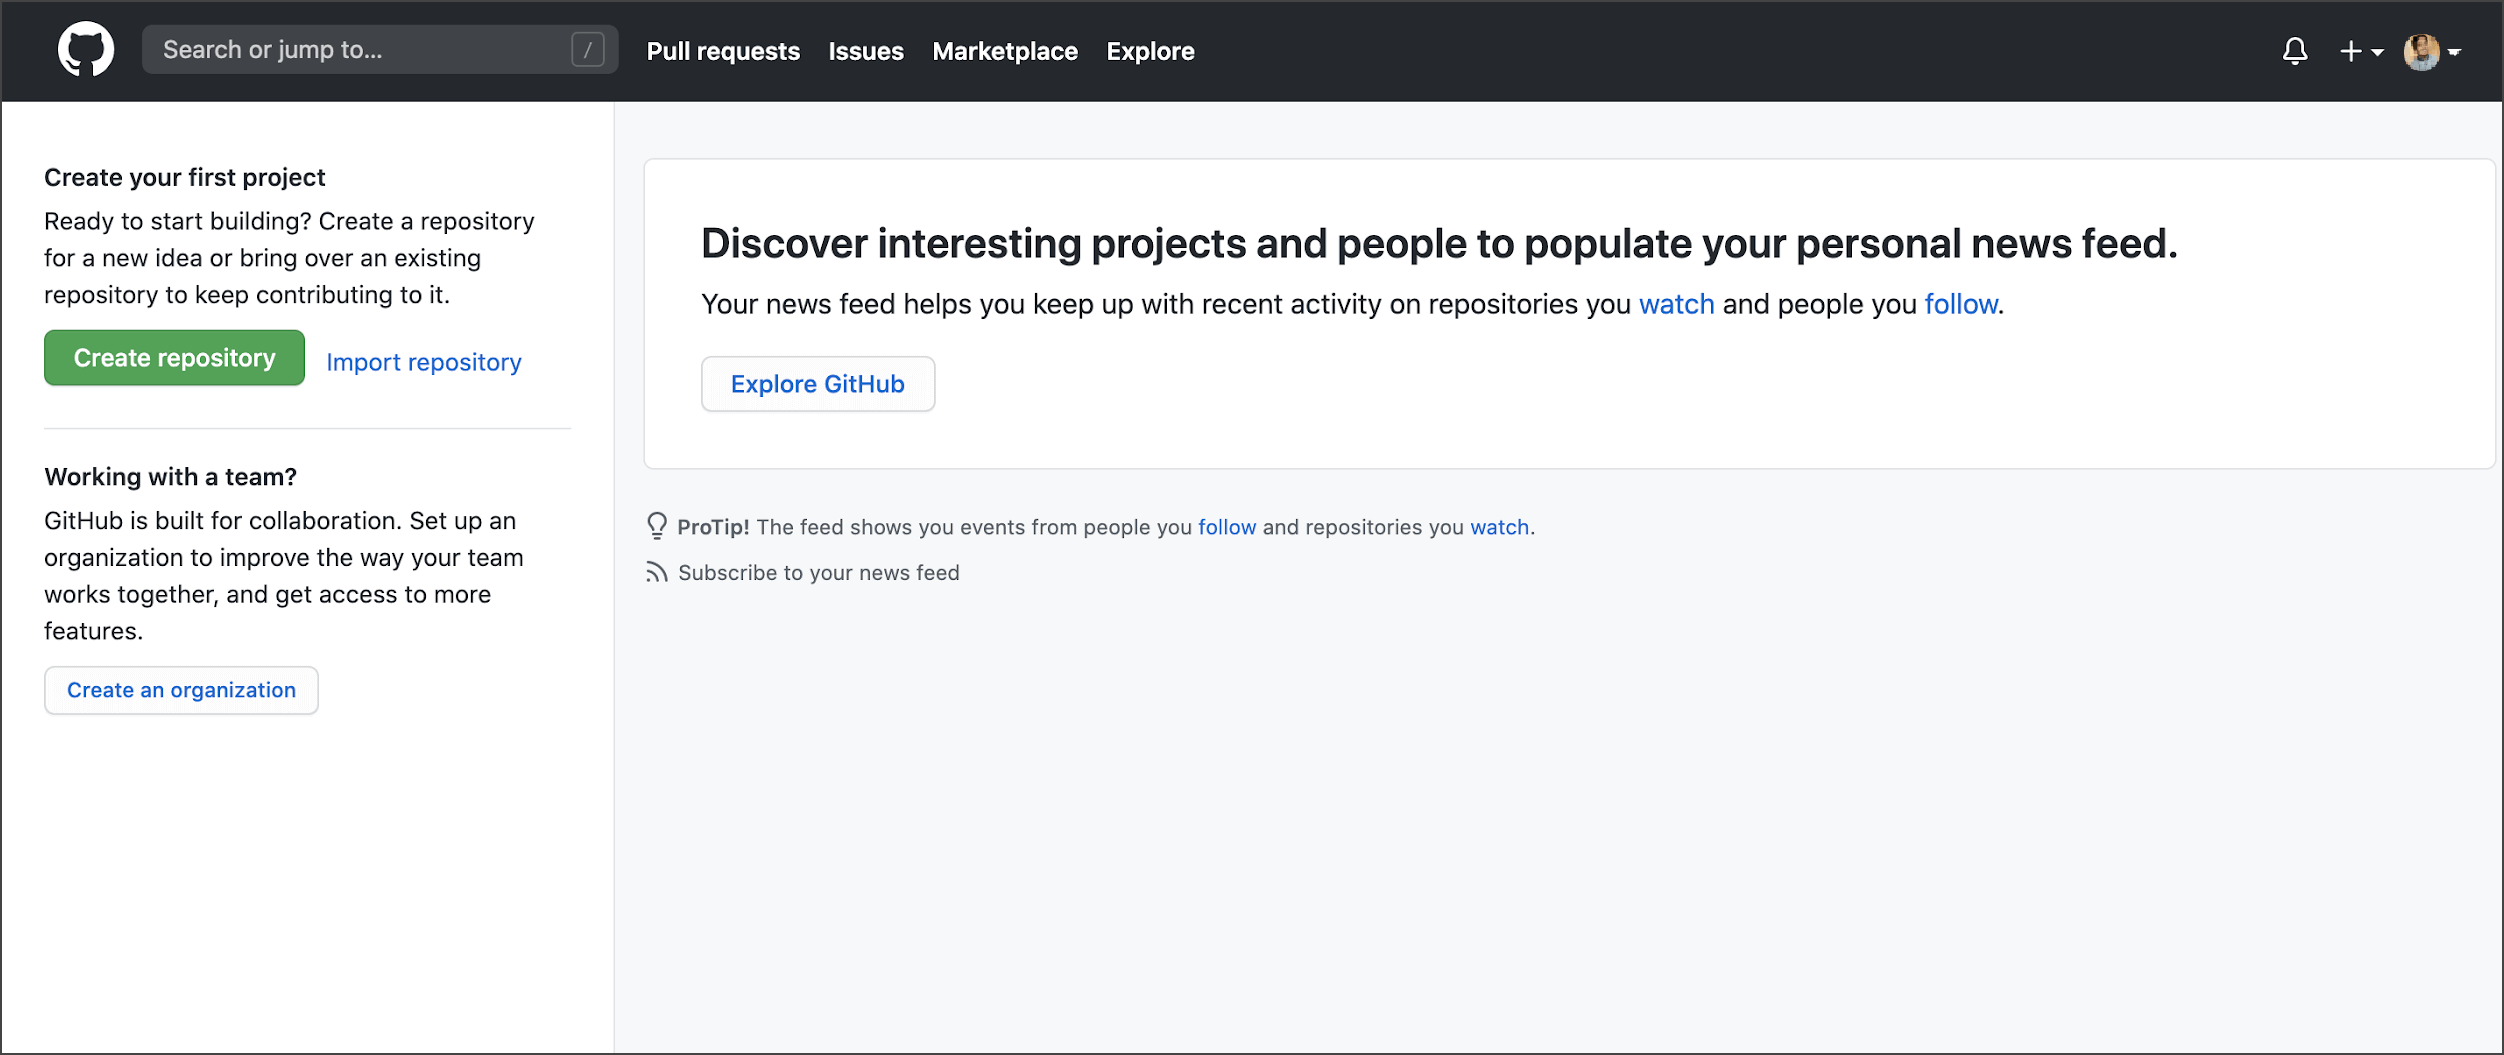 GitHub Homepage